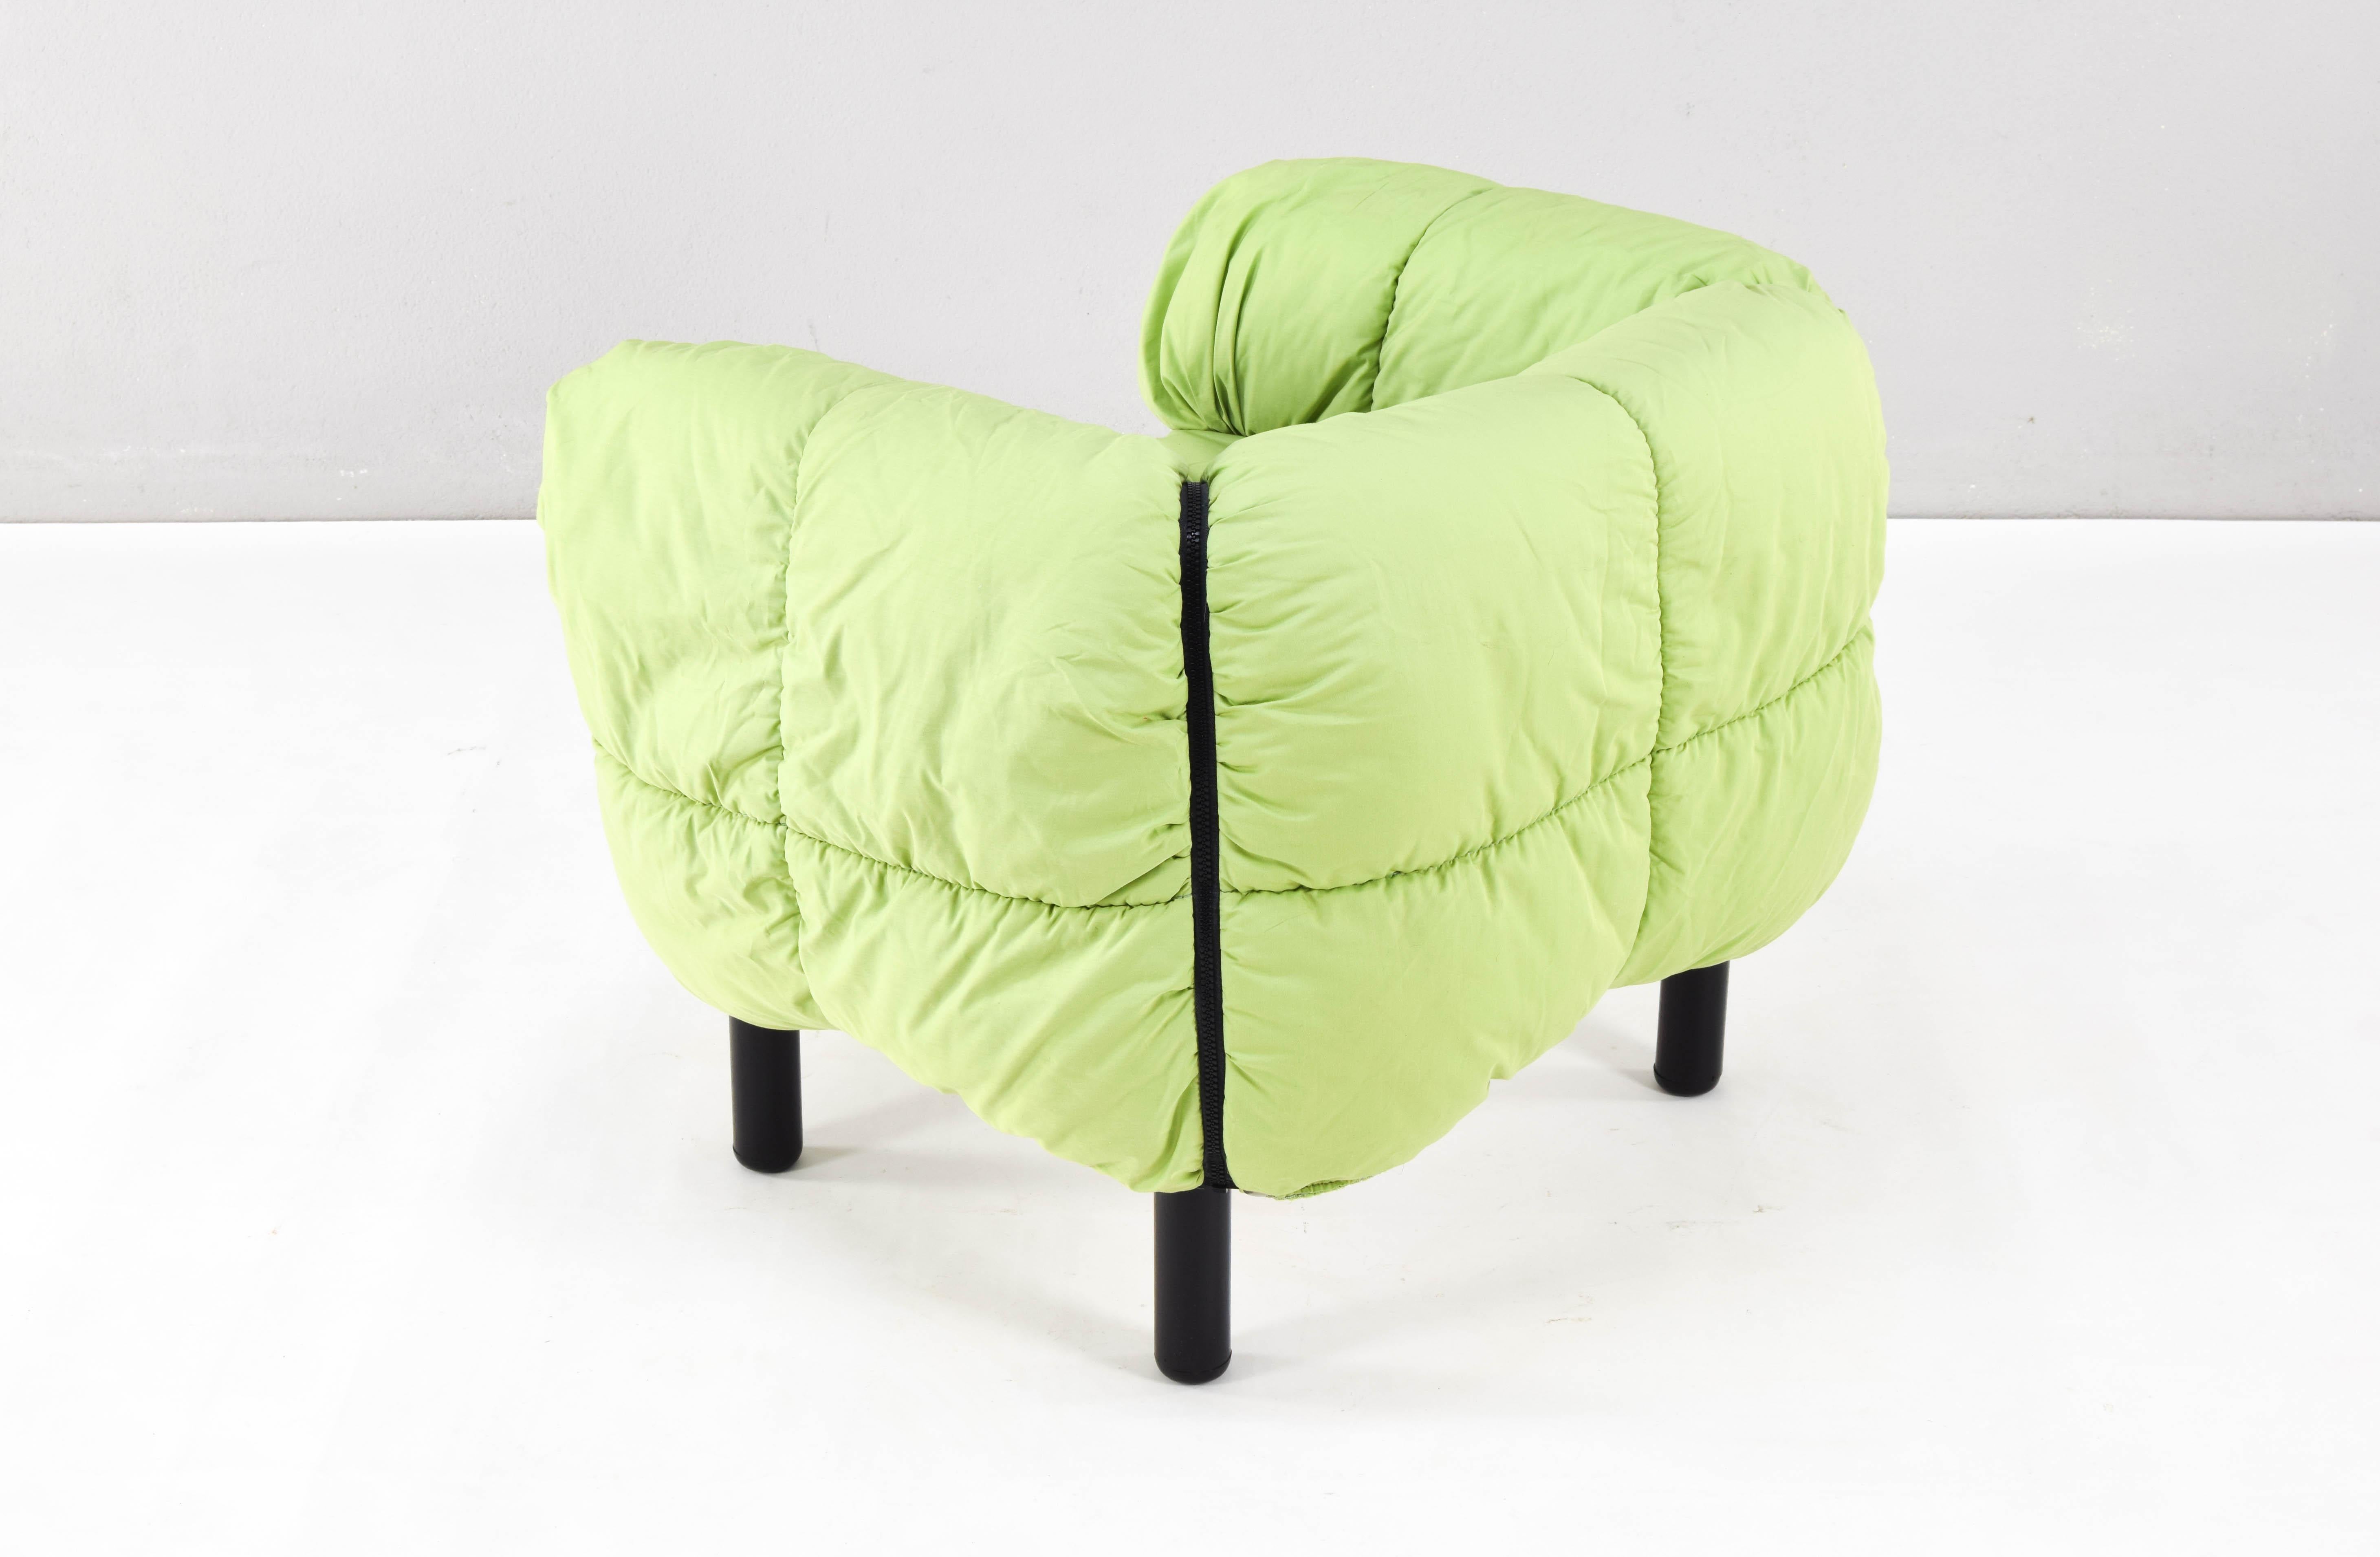 Pecorelle Strips Mid-Century Modern Chair by Cini Boeri to Arflex 1